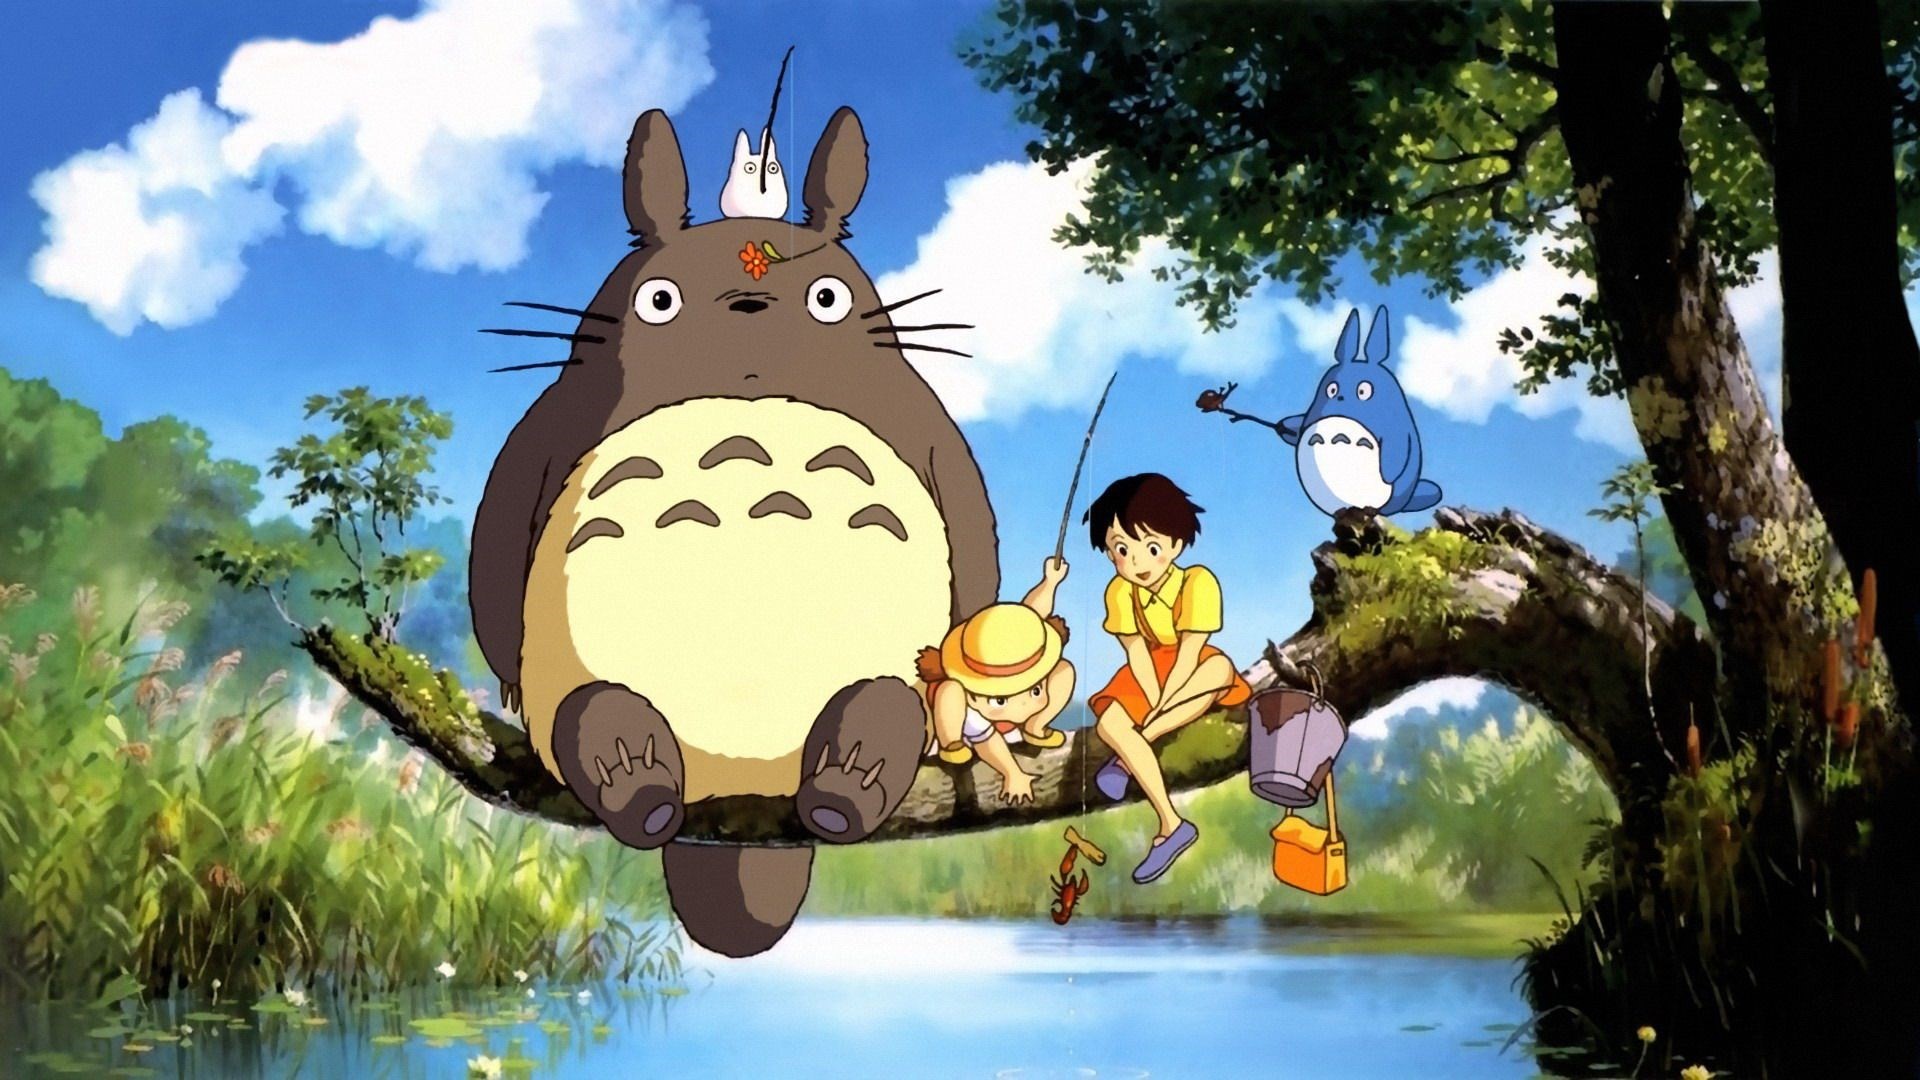 Unravelling the disturbing theory behind Ghibli's 'Totoro